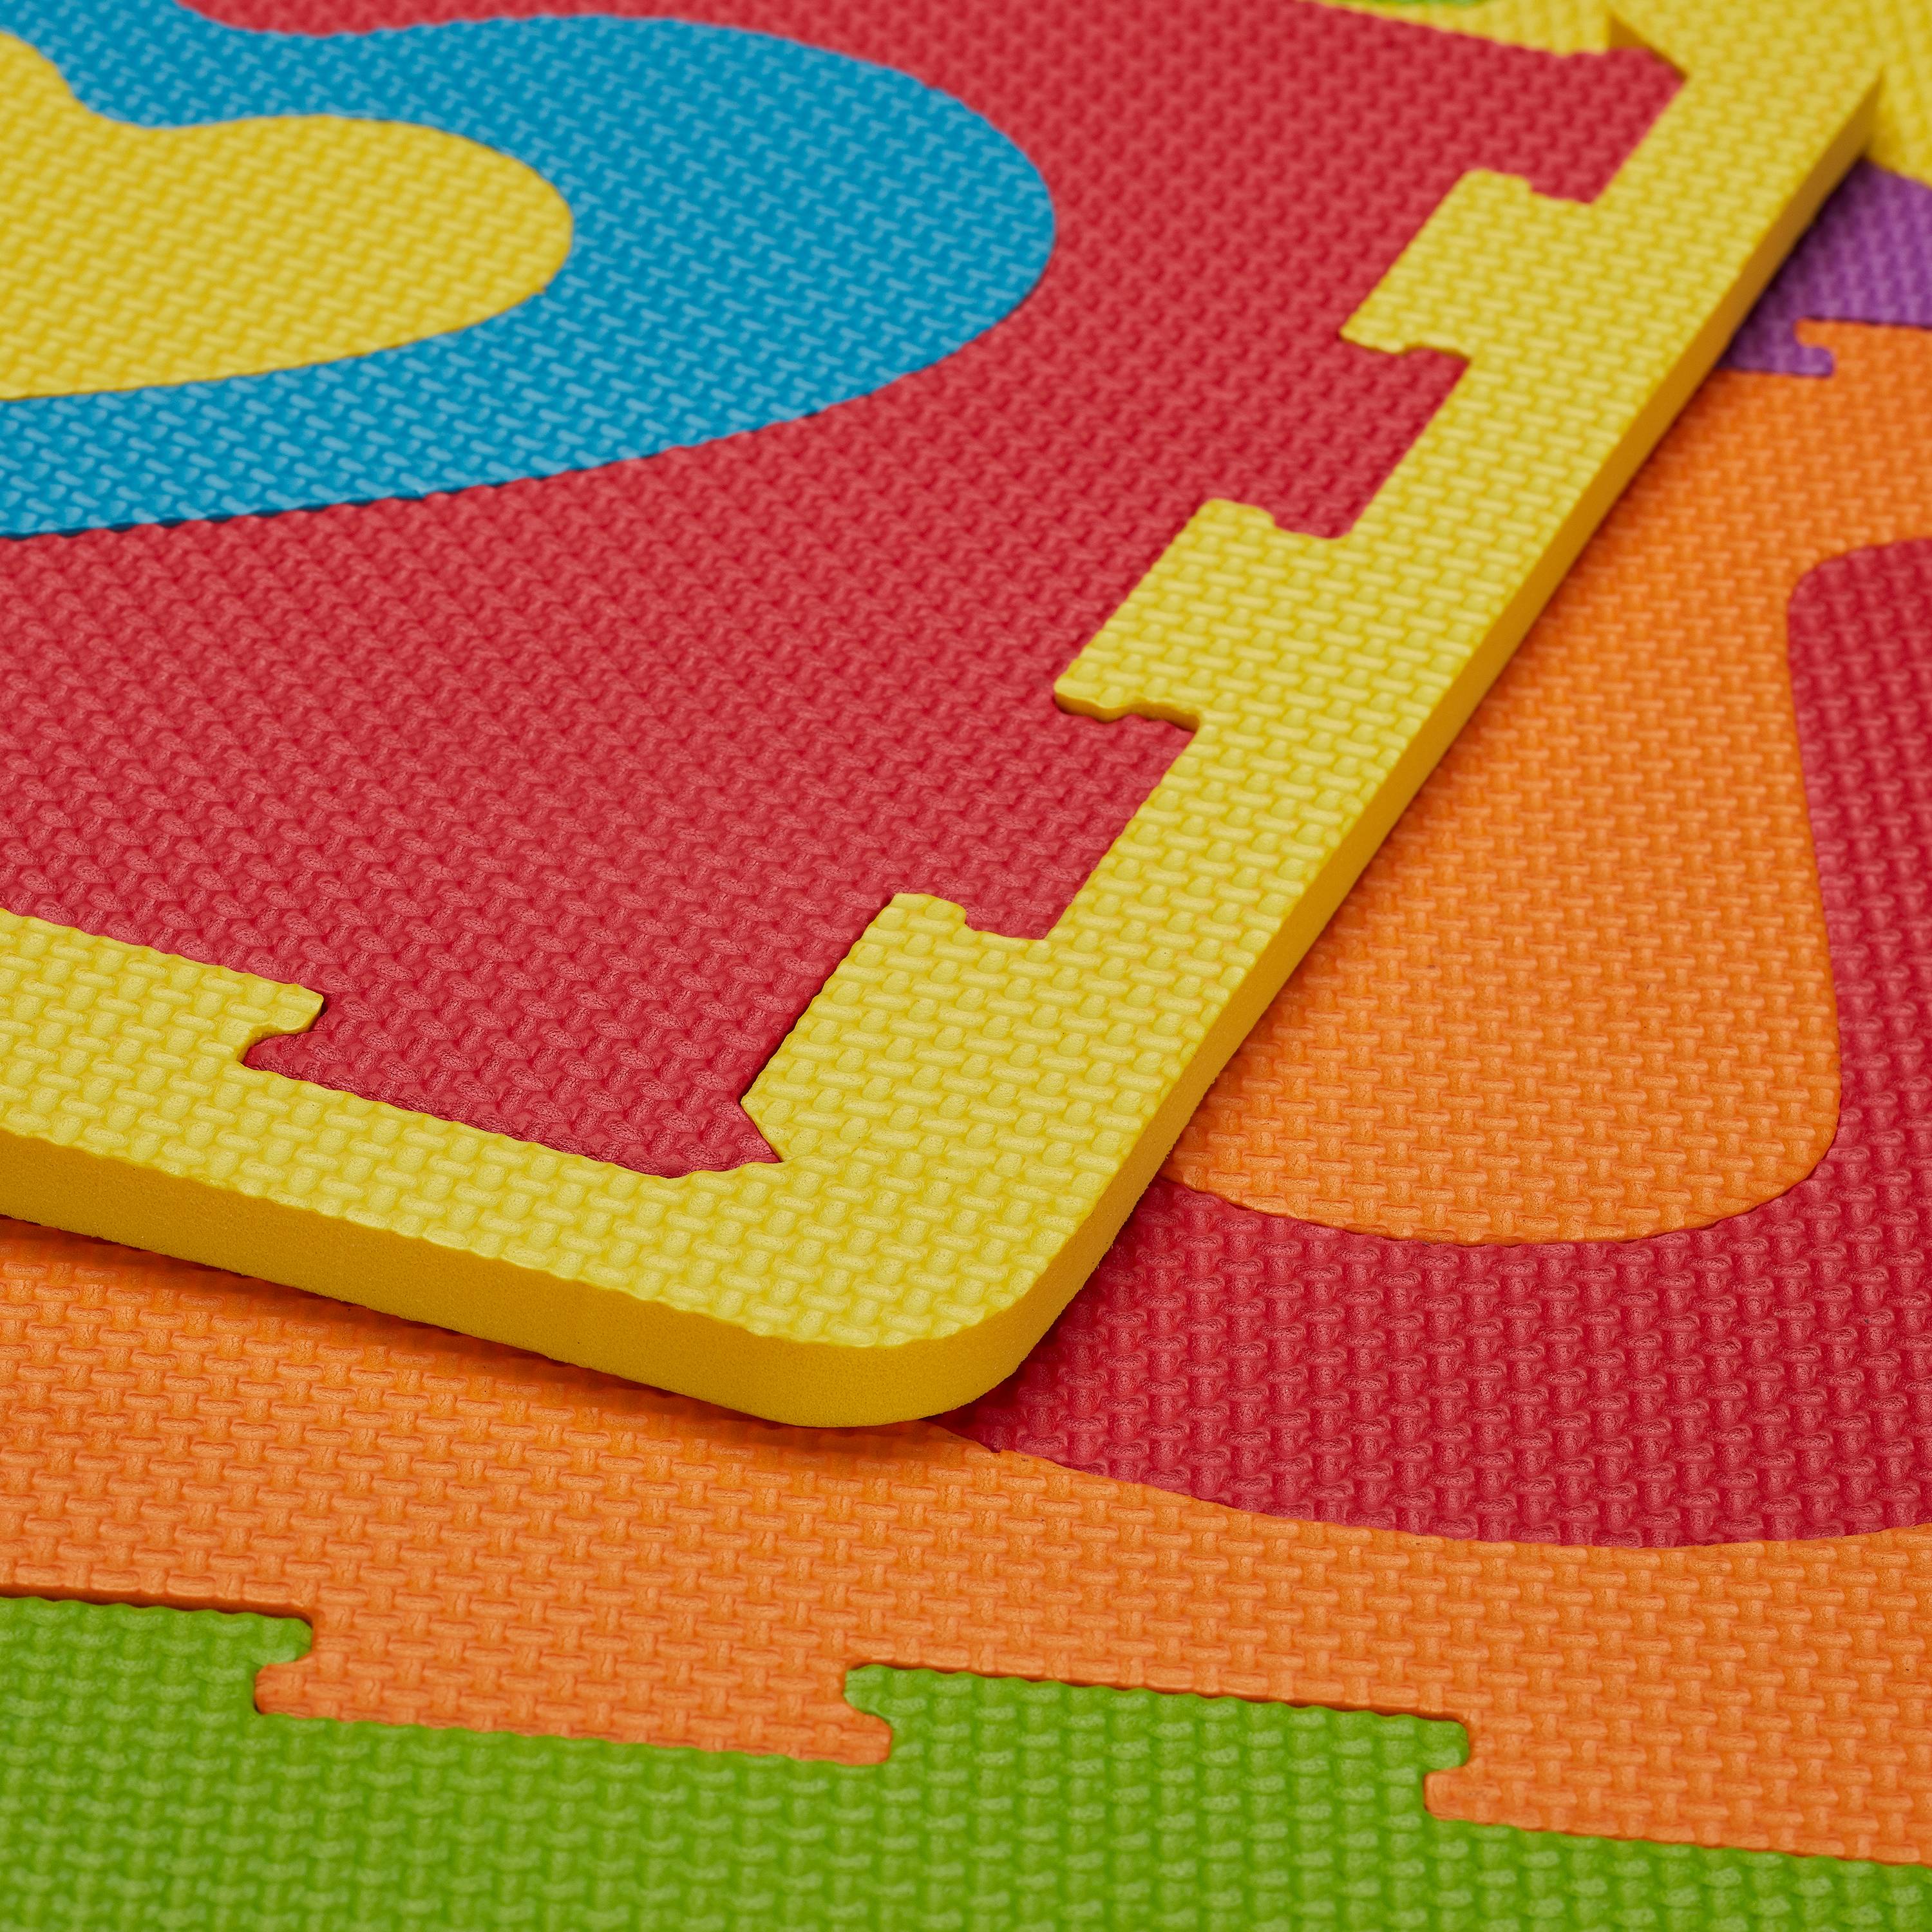 Spark. Create. Imagine. ABC Foam Playmat Learning Toy Set, 28 Pieces, Preschool - image 4 of 7